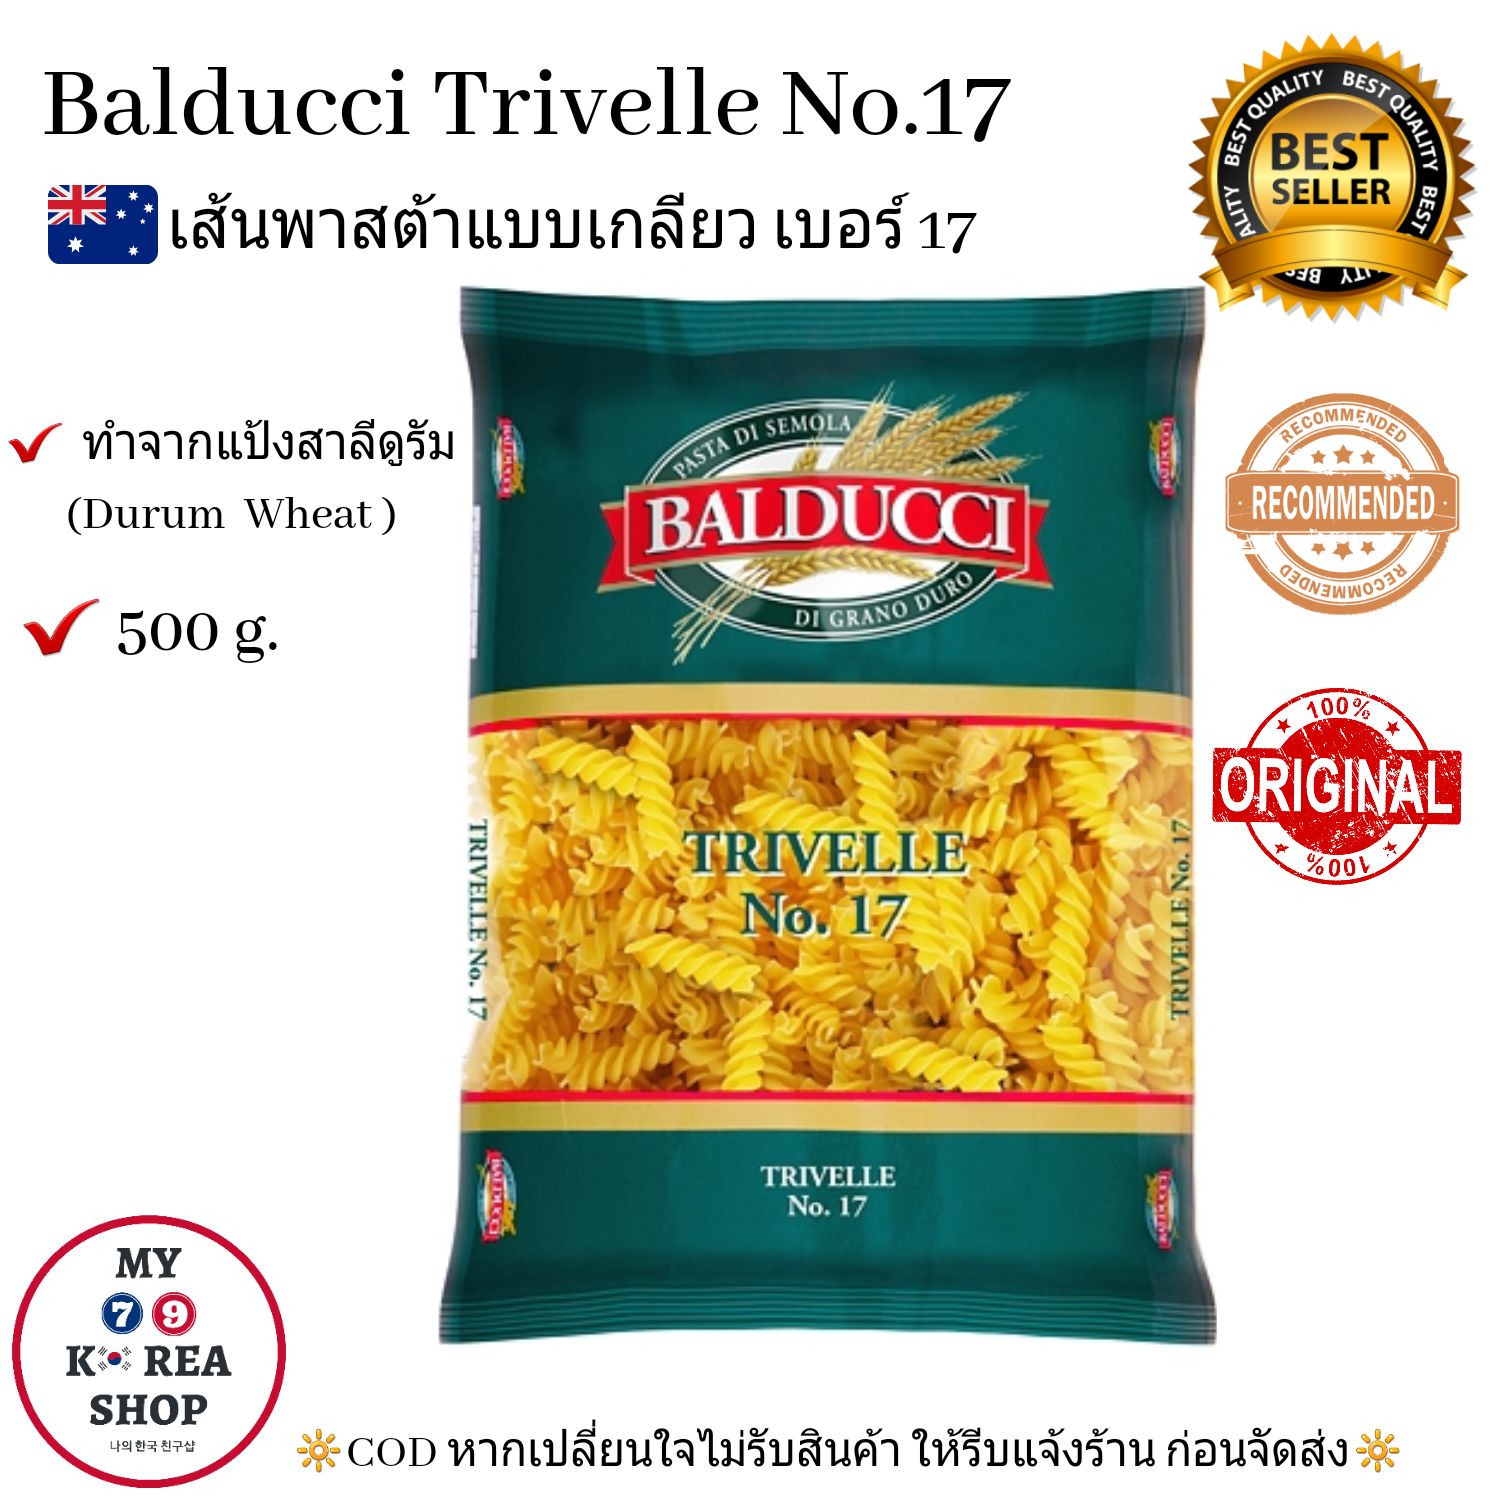 Balducci Trivelle No.17 (500g.) เส้นพาสต้าแบบเกลียว เบอร์ 17